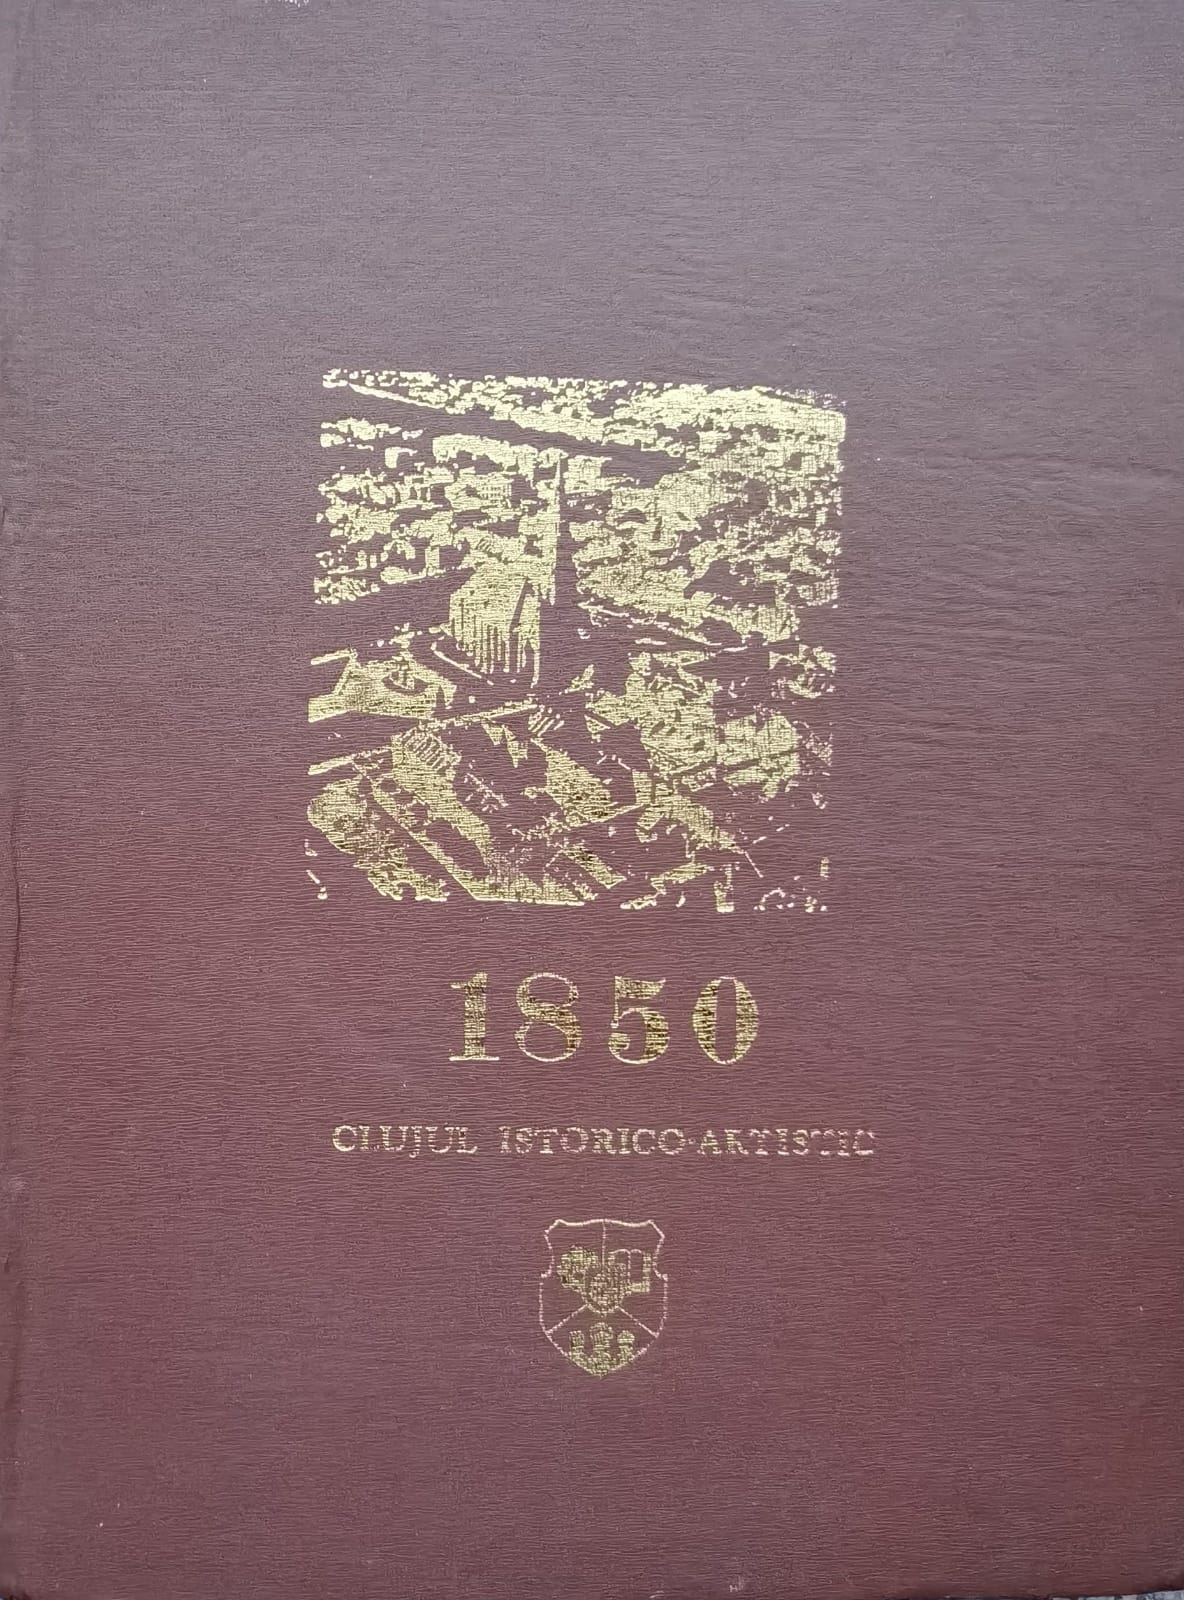 1850 clujul istorico-artistic                                                                        stefan pascu                                                                                        